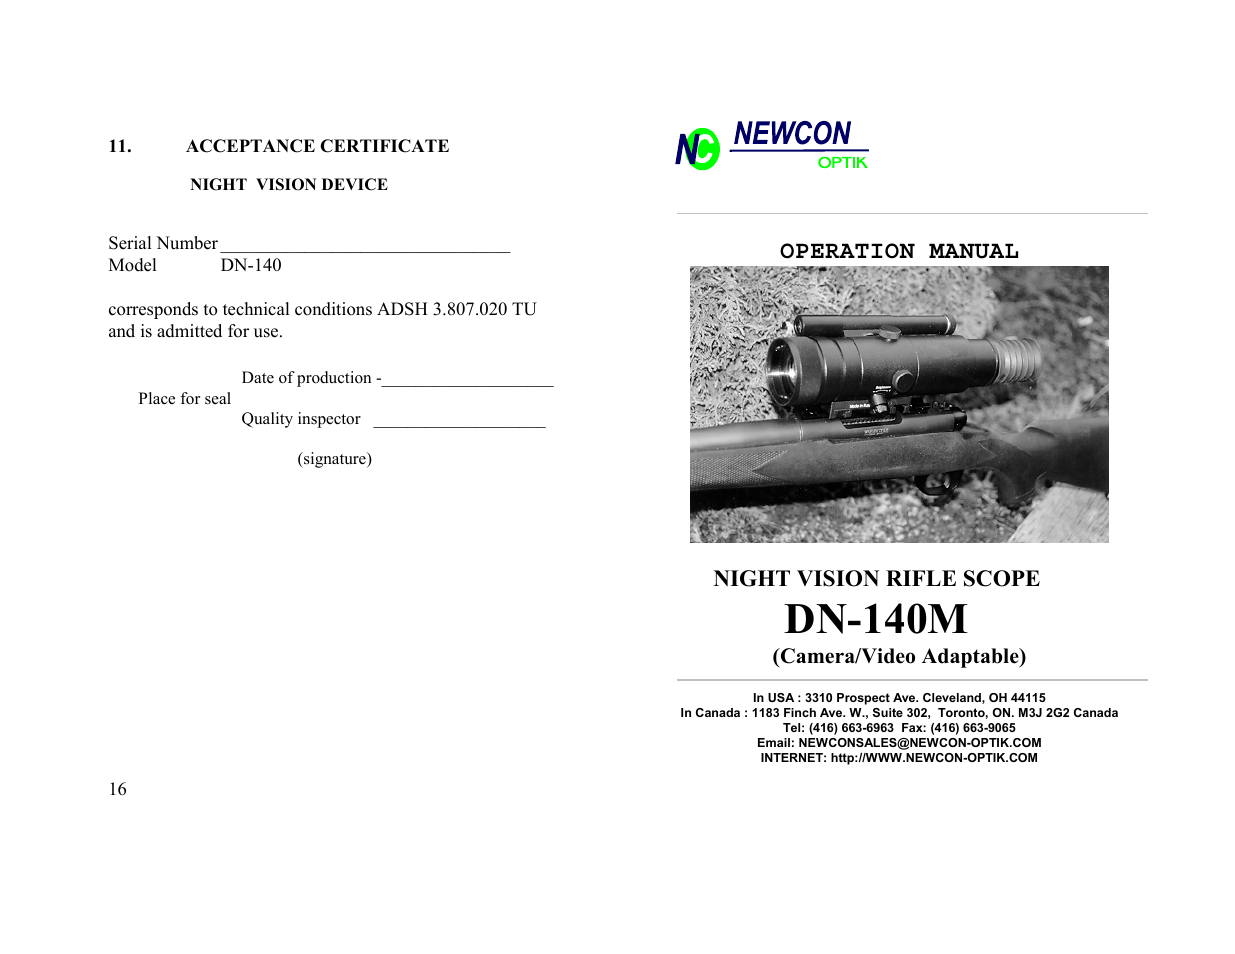 NIGHT VISION RIFLE SCOPE DN-140